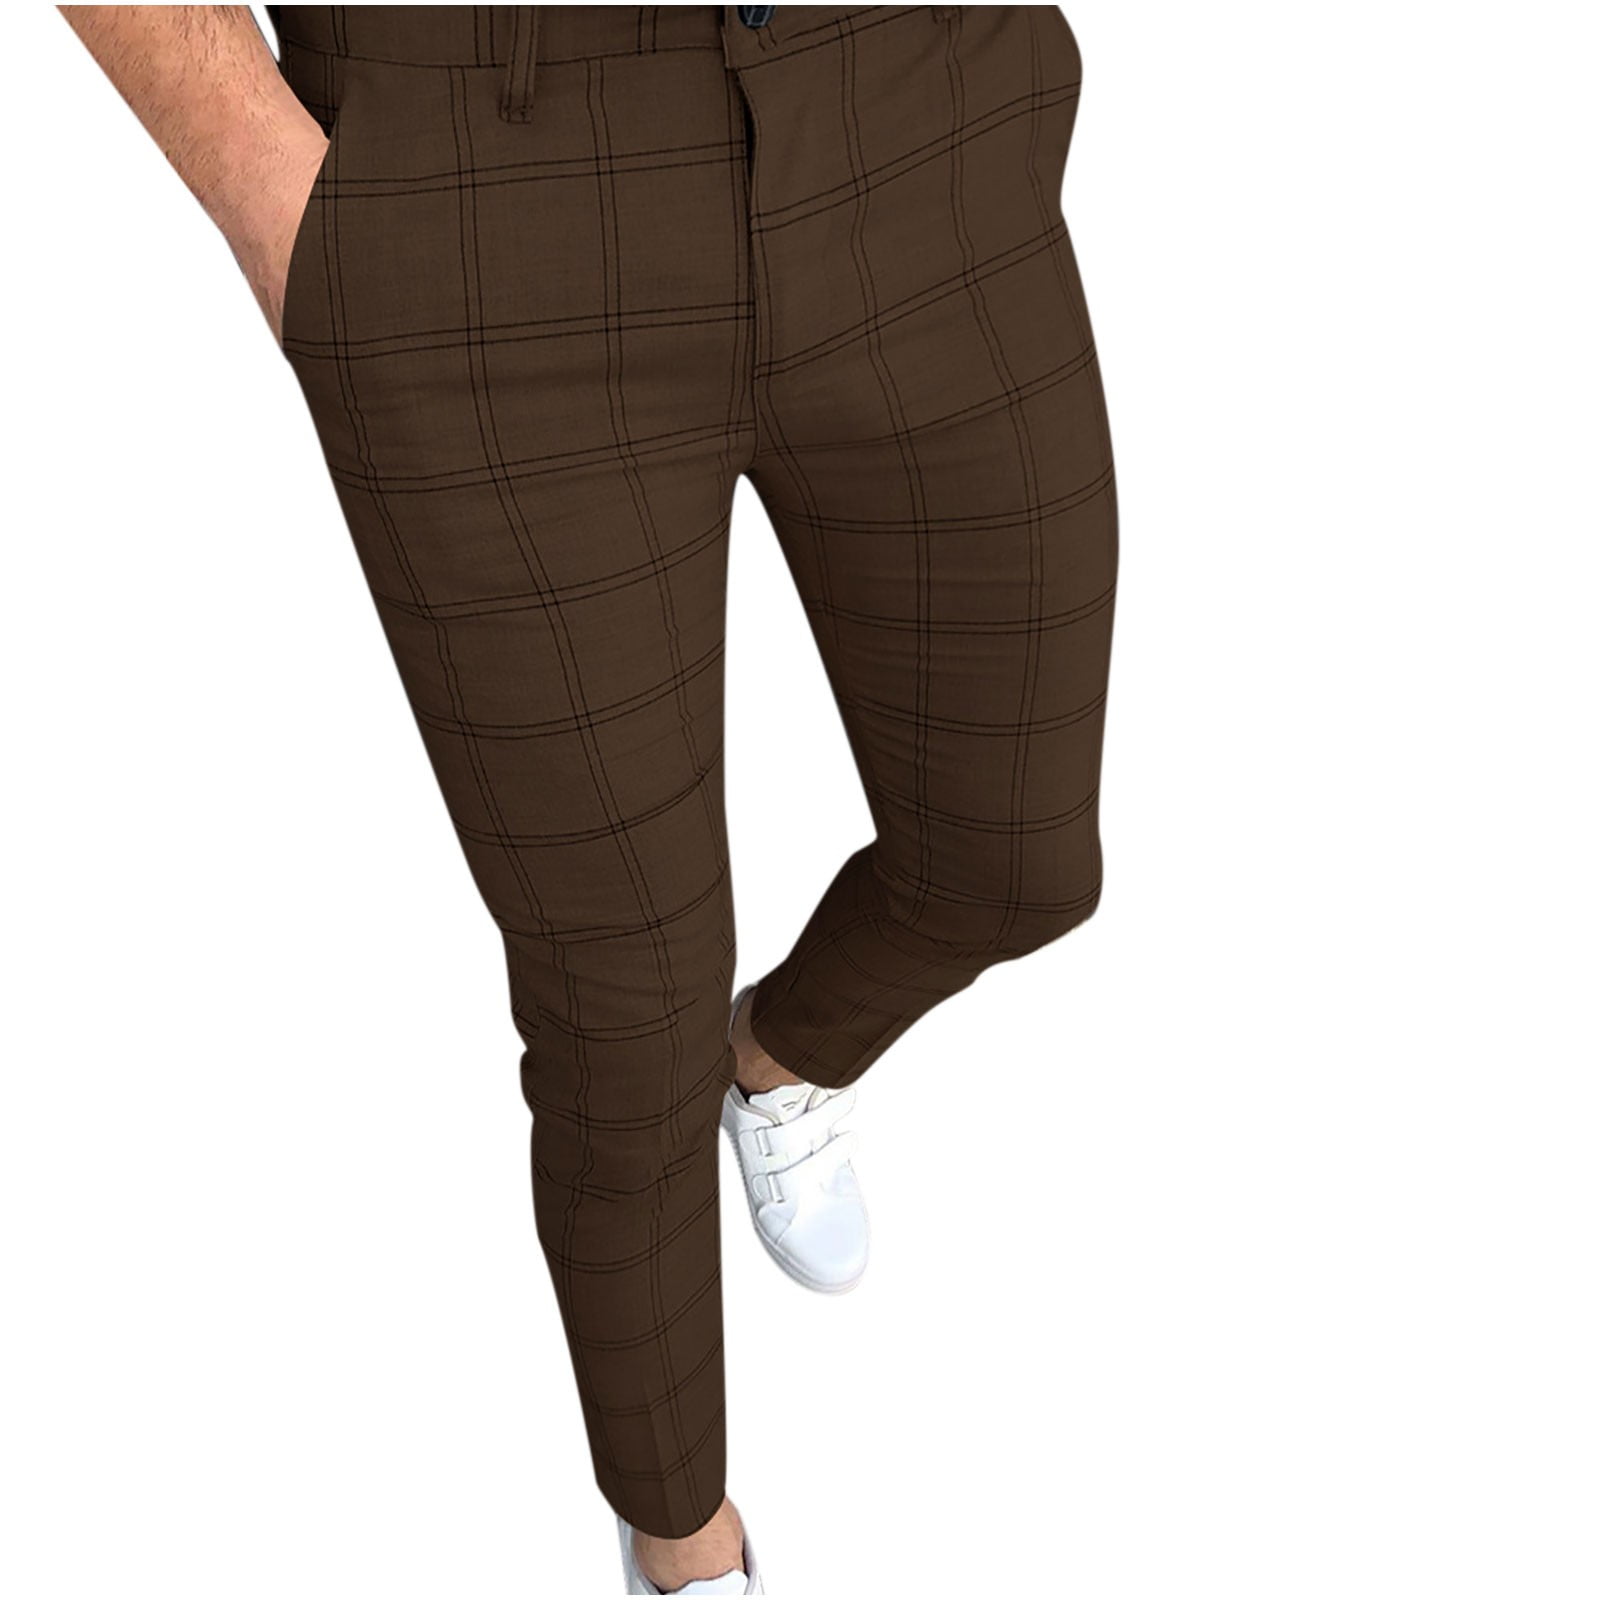 Formal Work Long Pants Men Cropped Pants Business Trousers Casual Suit Pants  | eBay